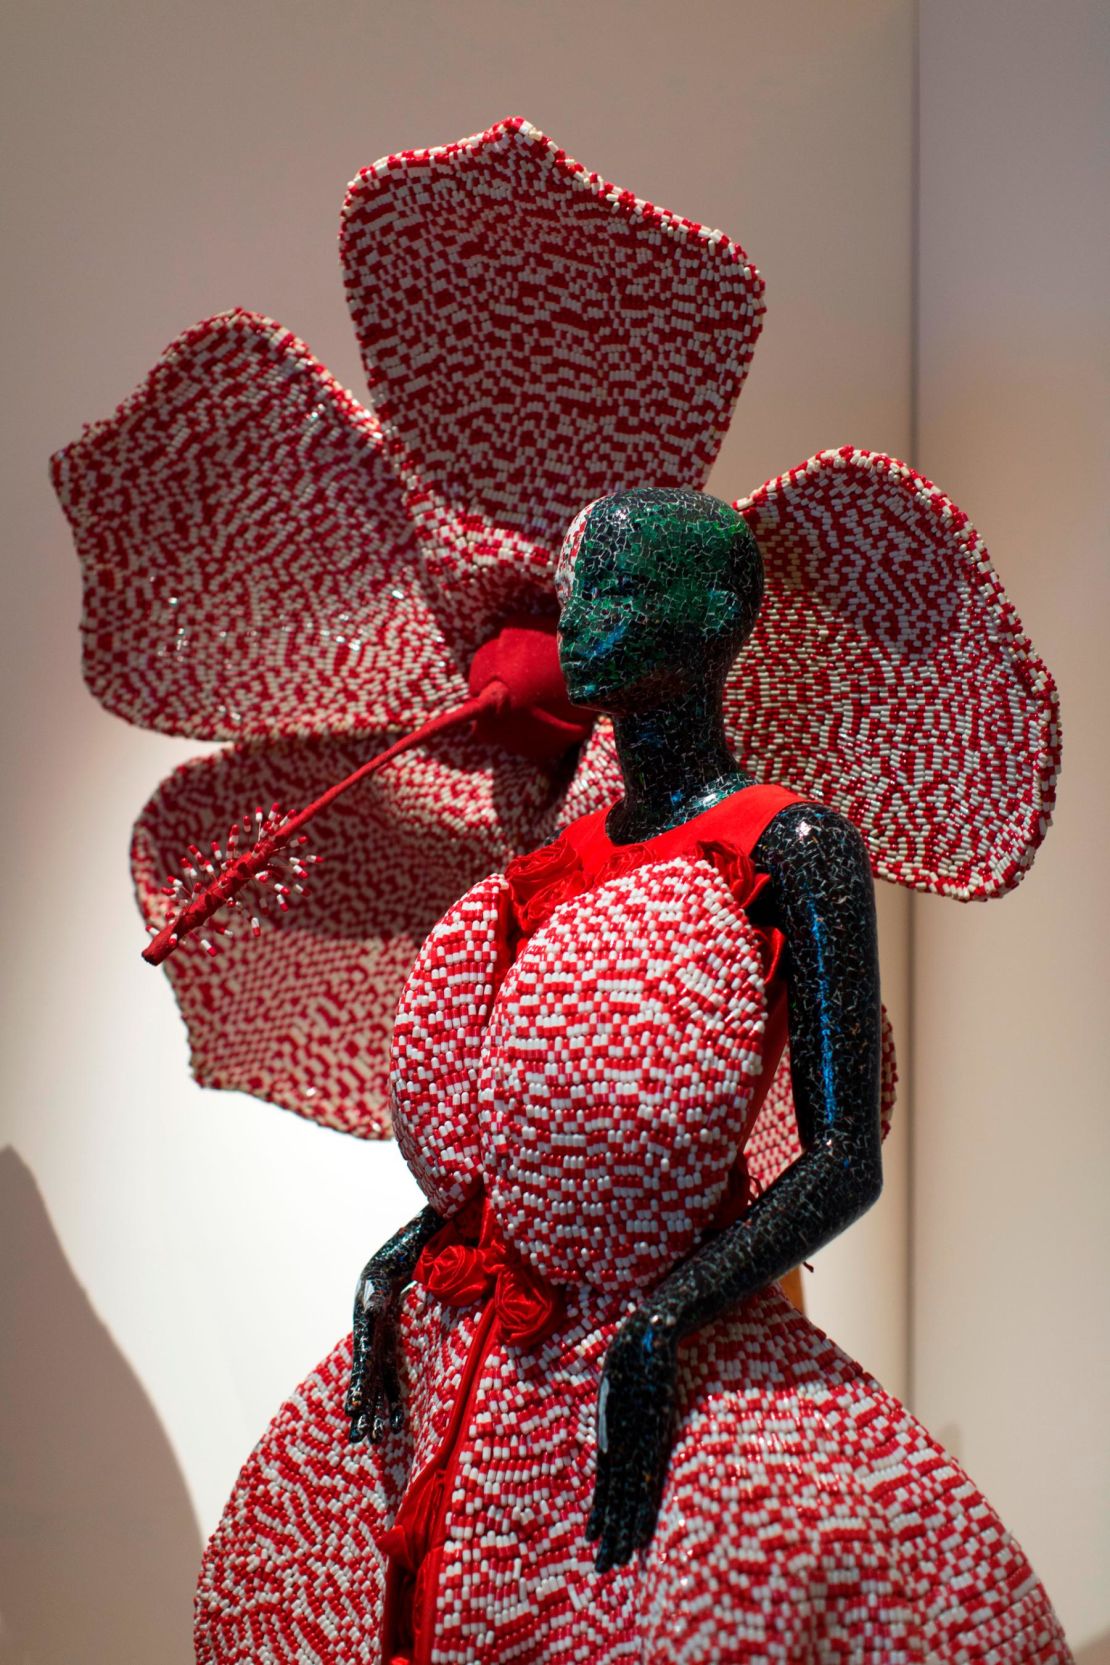 Cedric Mizero's installation at the International Fashion Showcase in Somerset House, London.